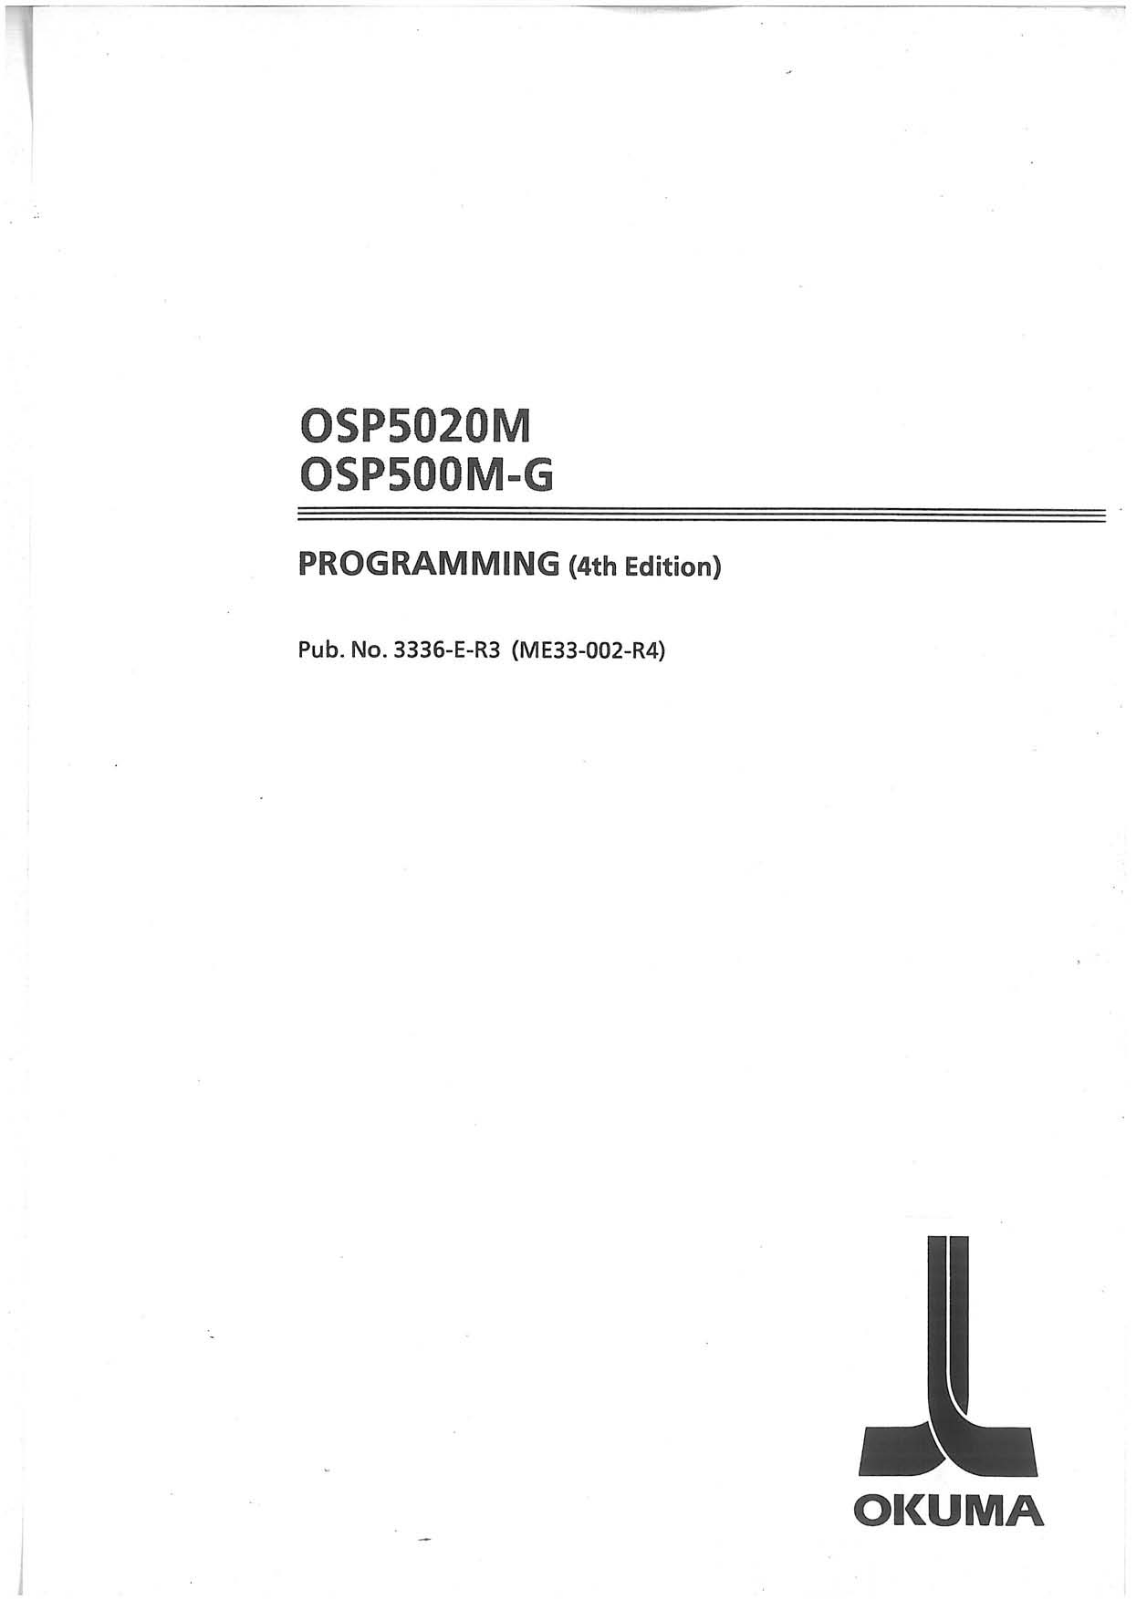 okuma OSP5020M, OSP500M-G Programming Manual